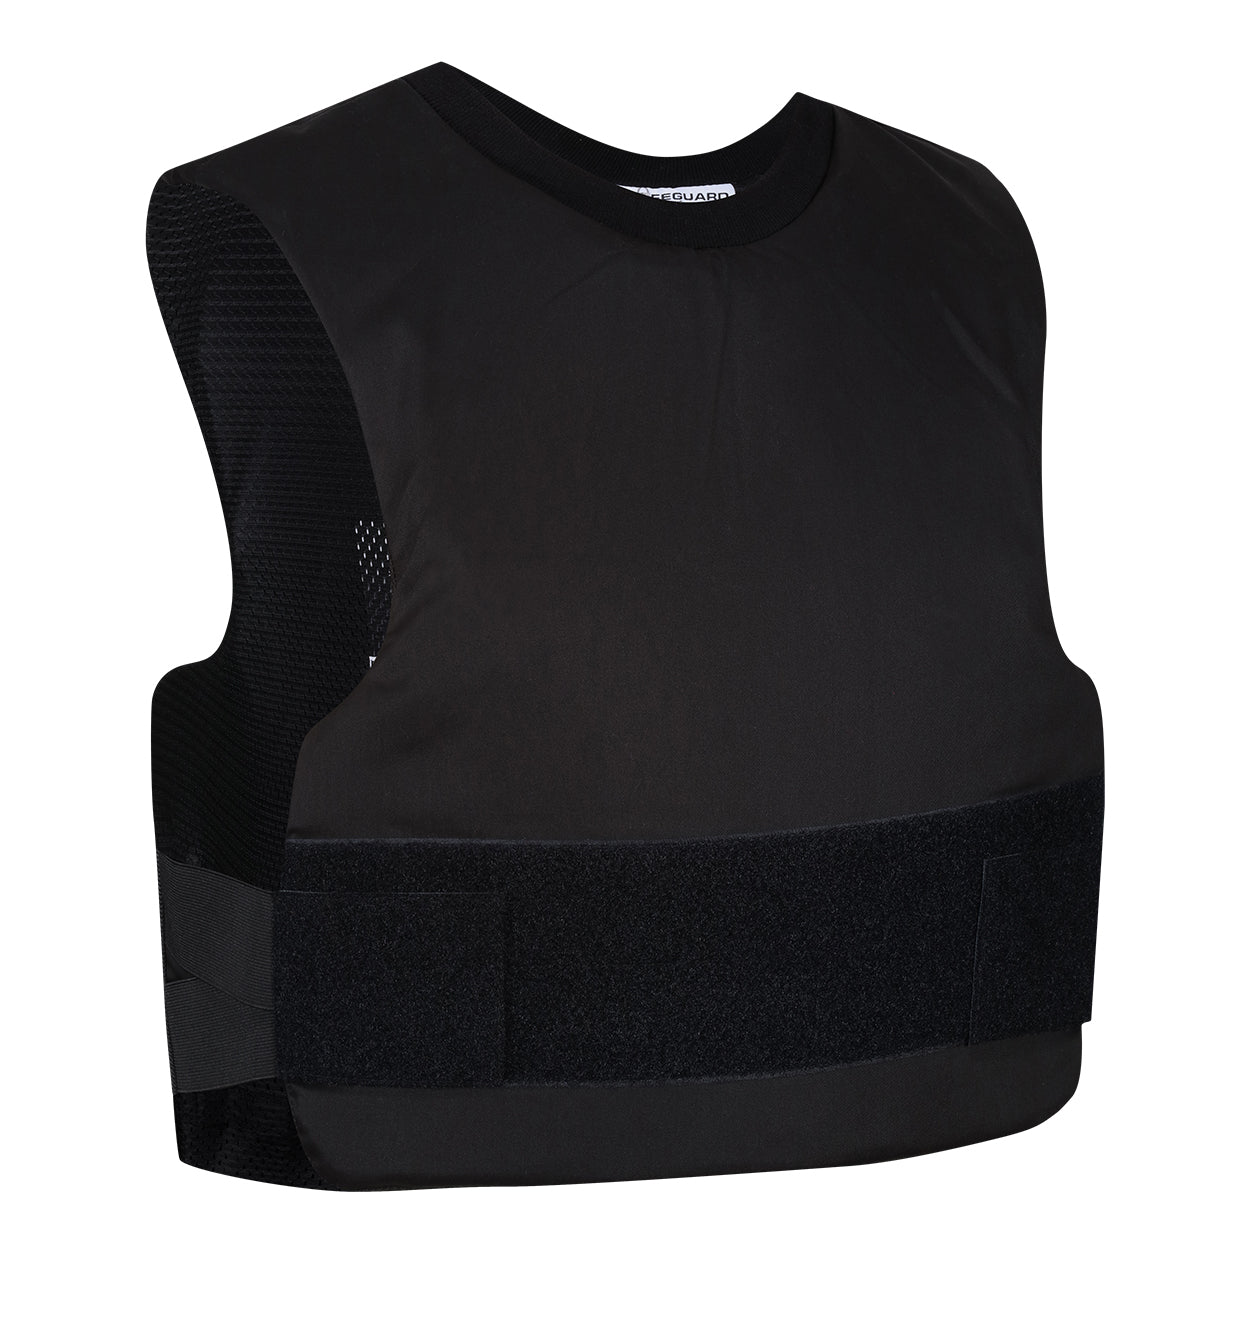 Bulletproof Dress Vest - NIJ IIIA & Stab Proof